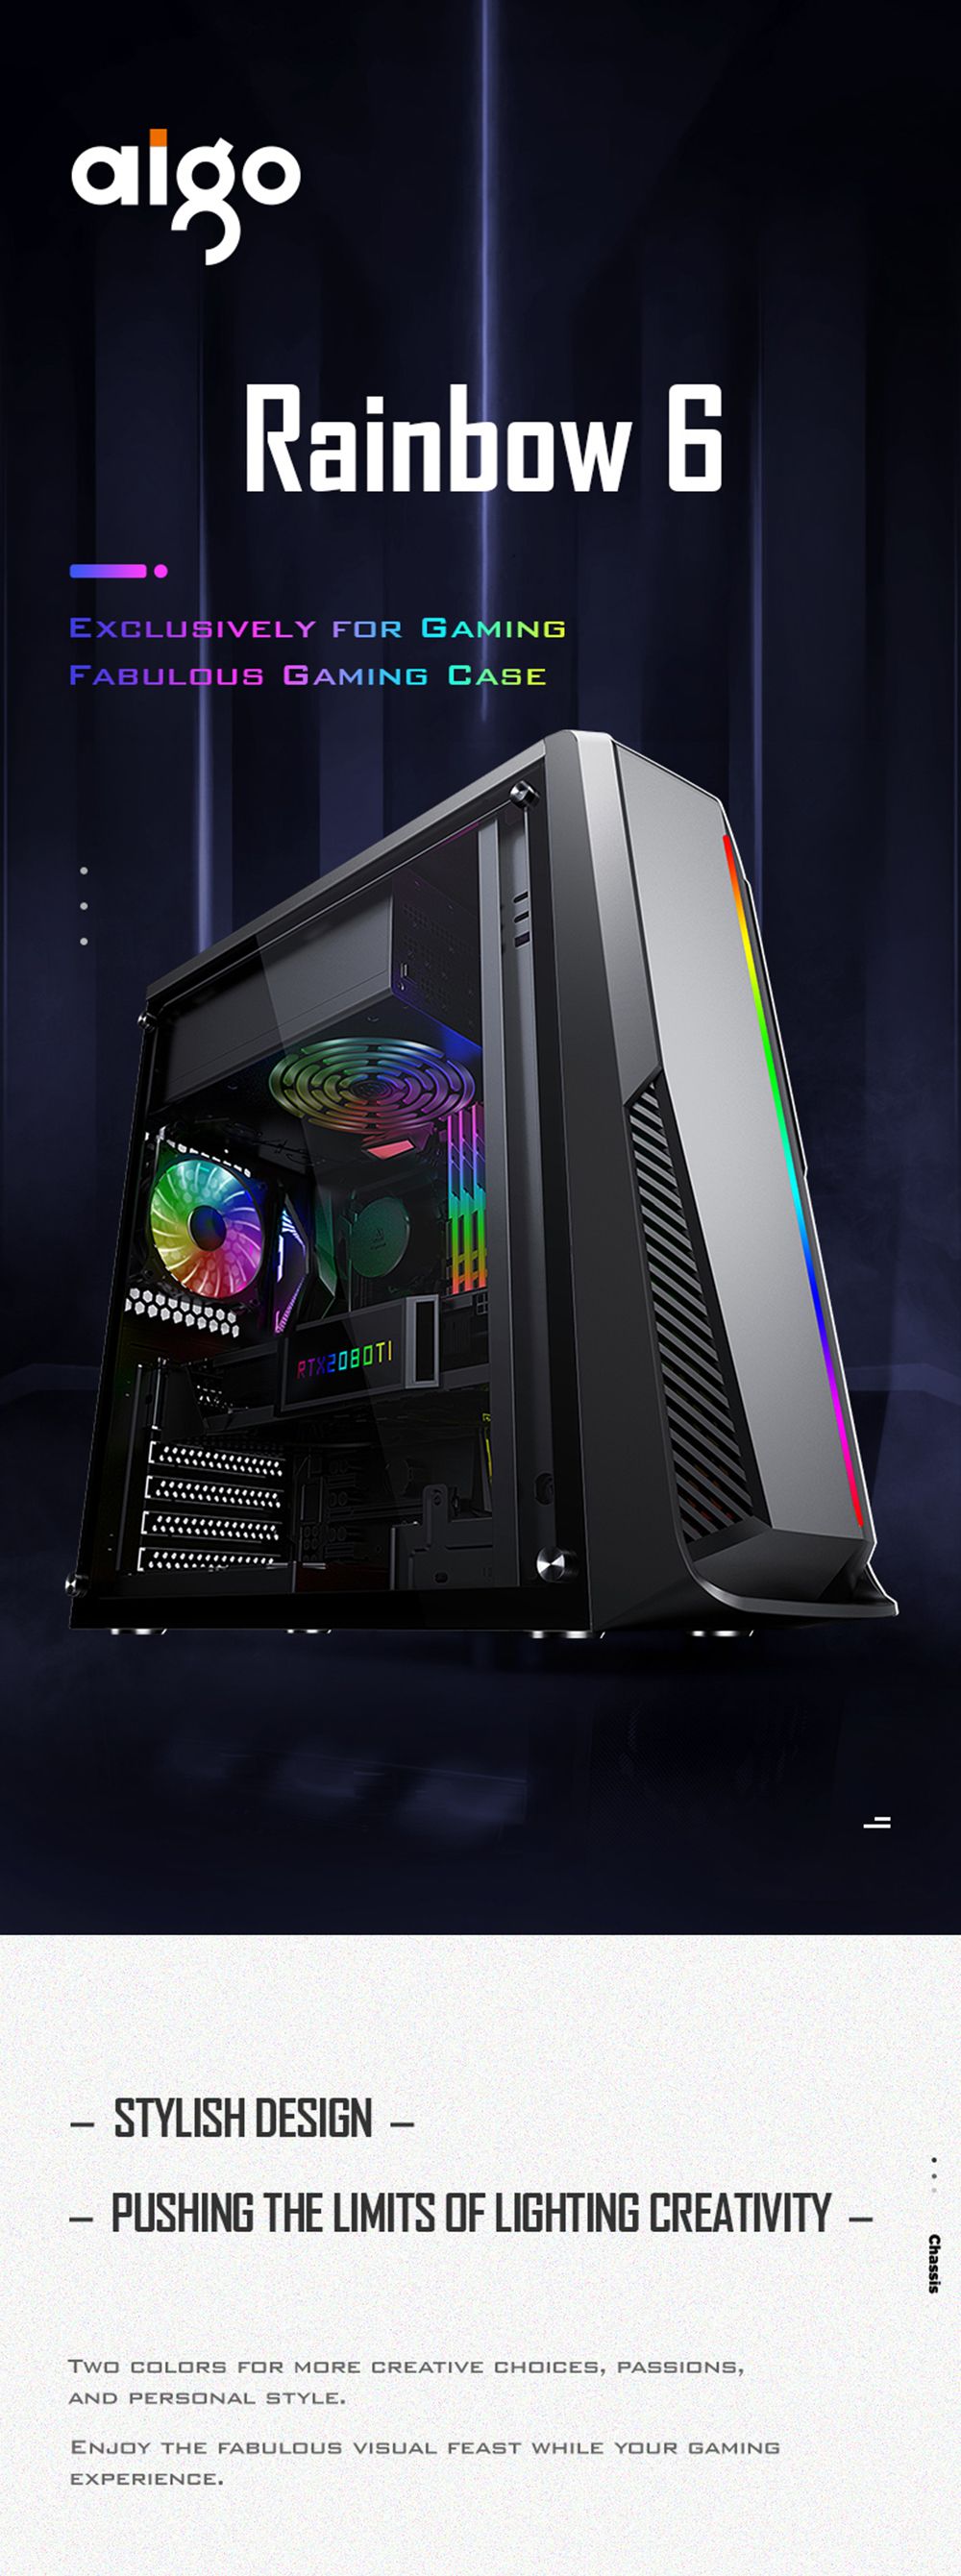 Aigo-Rainbow6-Gaming-Computer-Case-Acrylic-Side-Panel-ATXM-ATX-VGA-Supported-USB-30-1665914